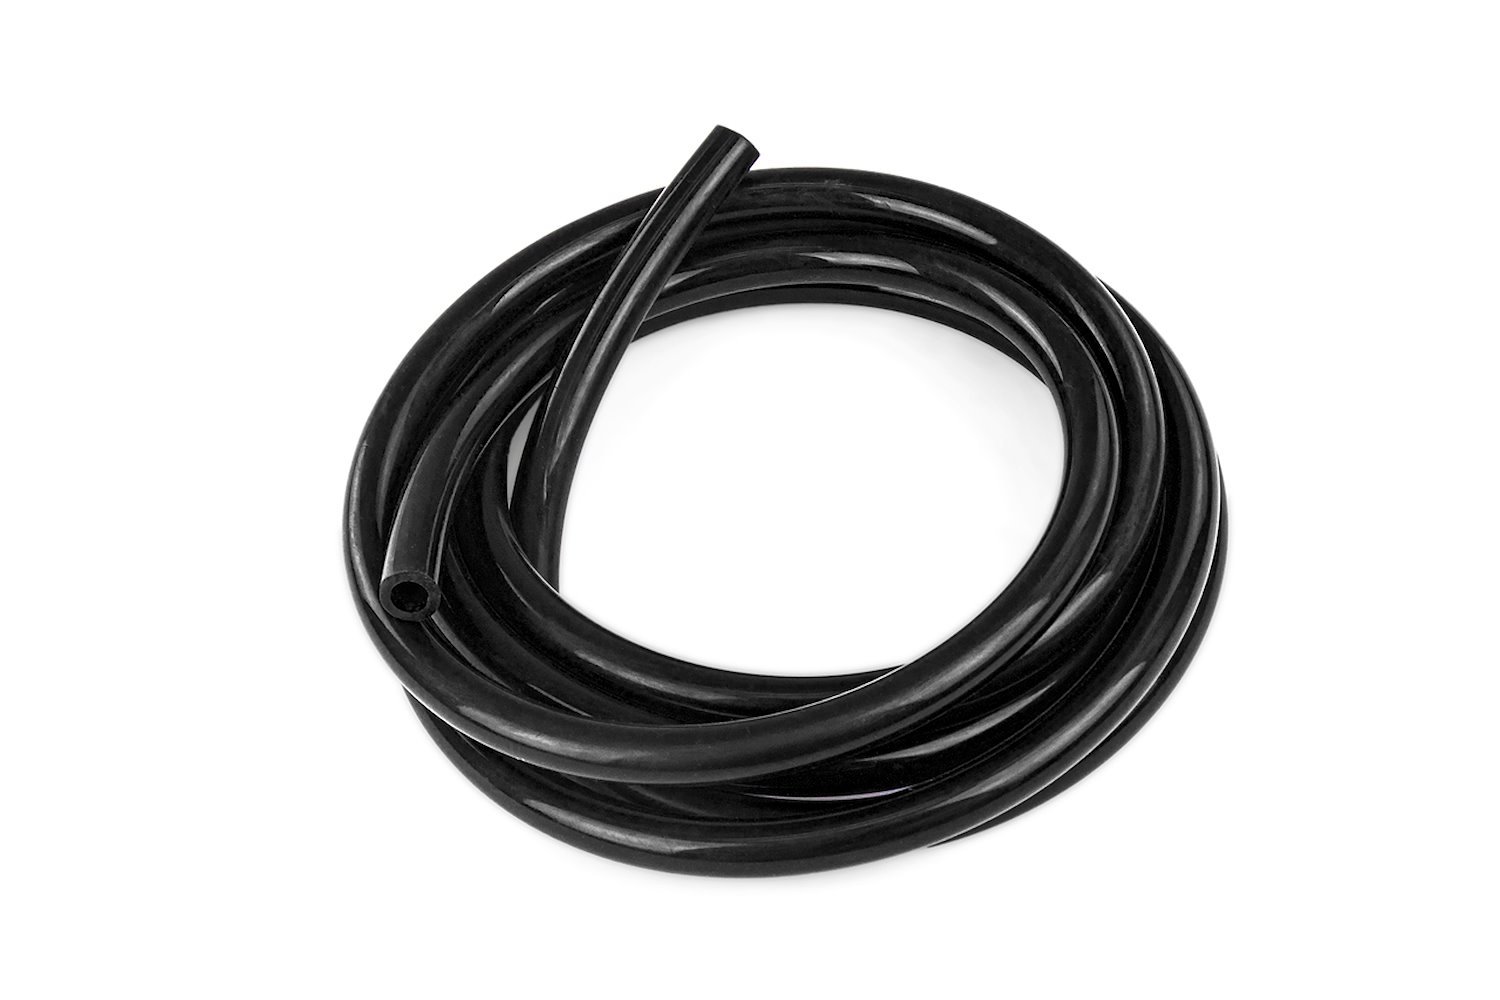 HTSVH3-BLKx5 High-Temperature Silicone Vacuum Hose Tubing, 1/8 in. ID, 5 ft. Roll, Black